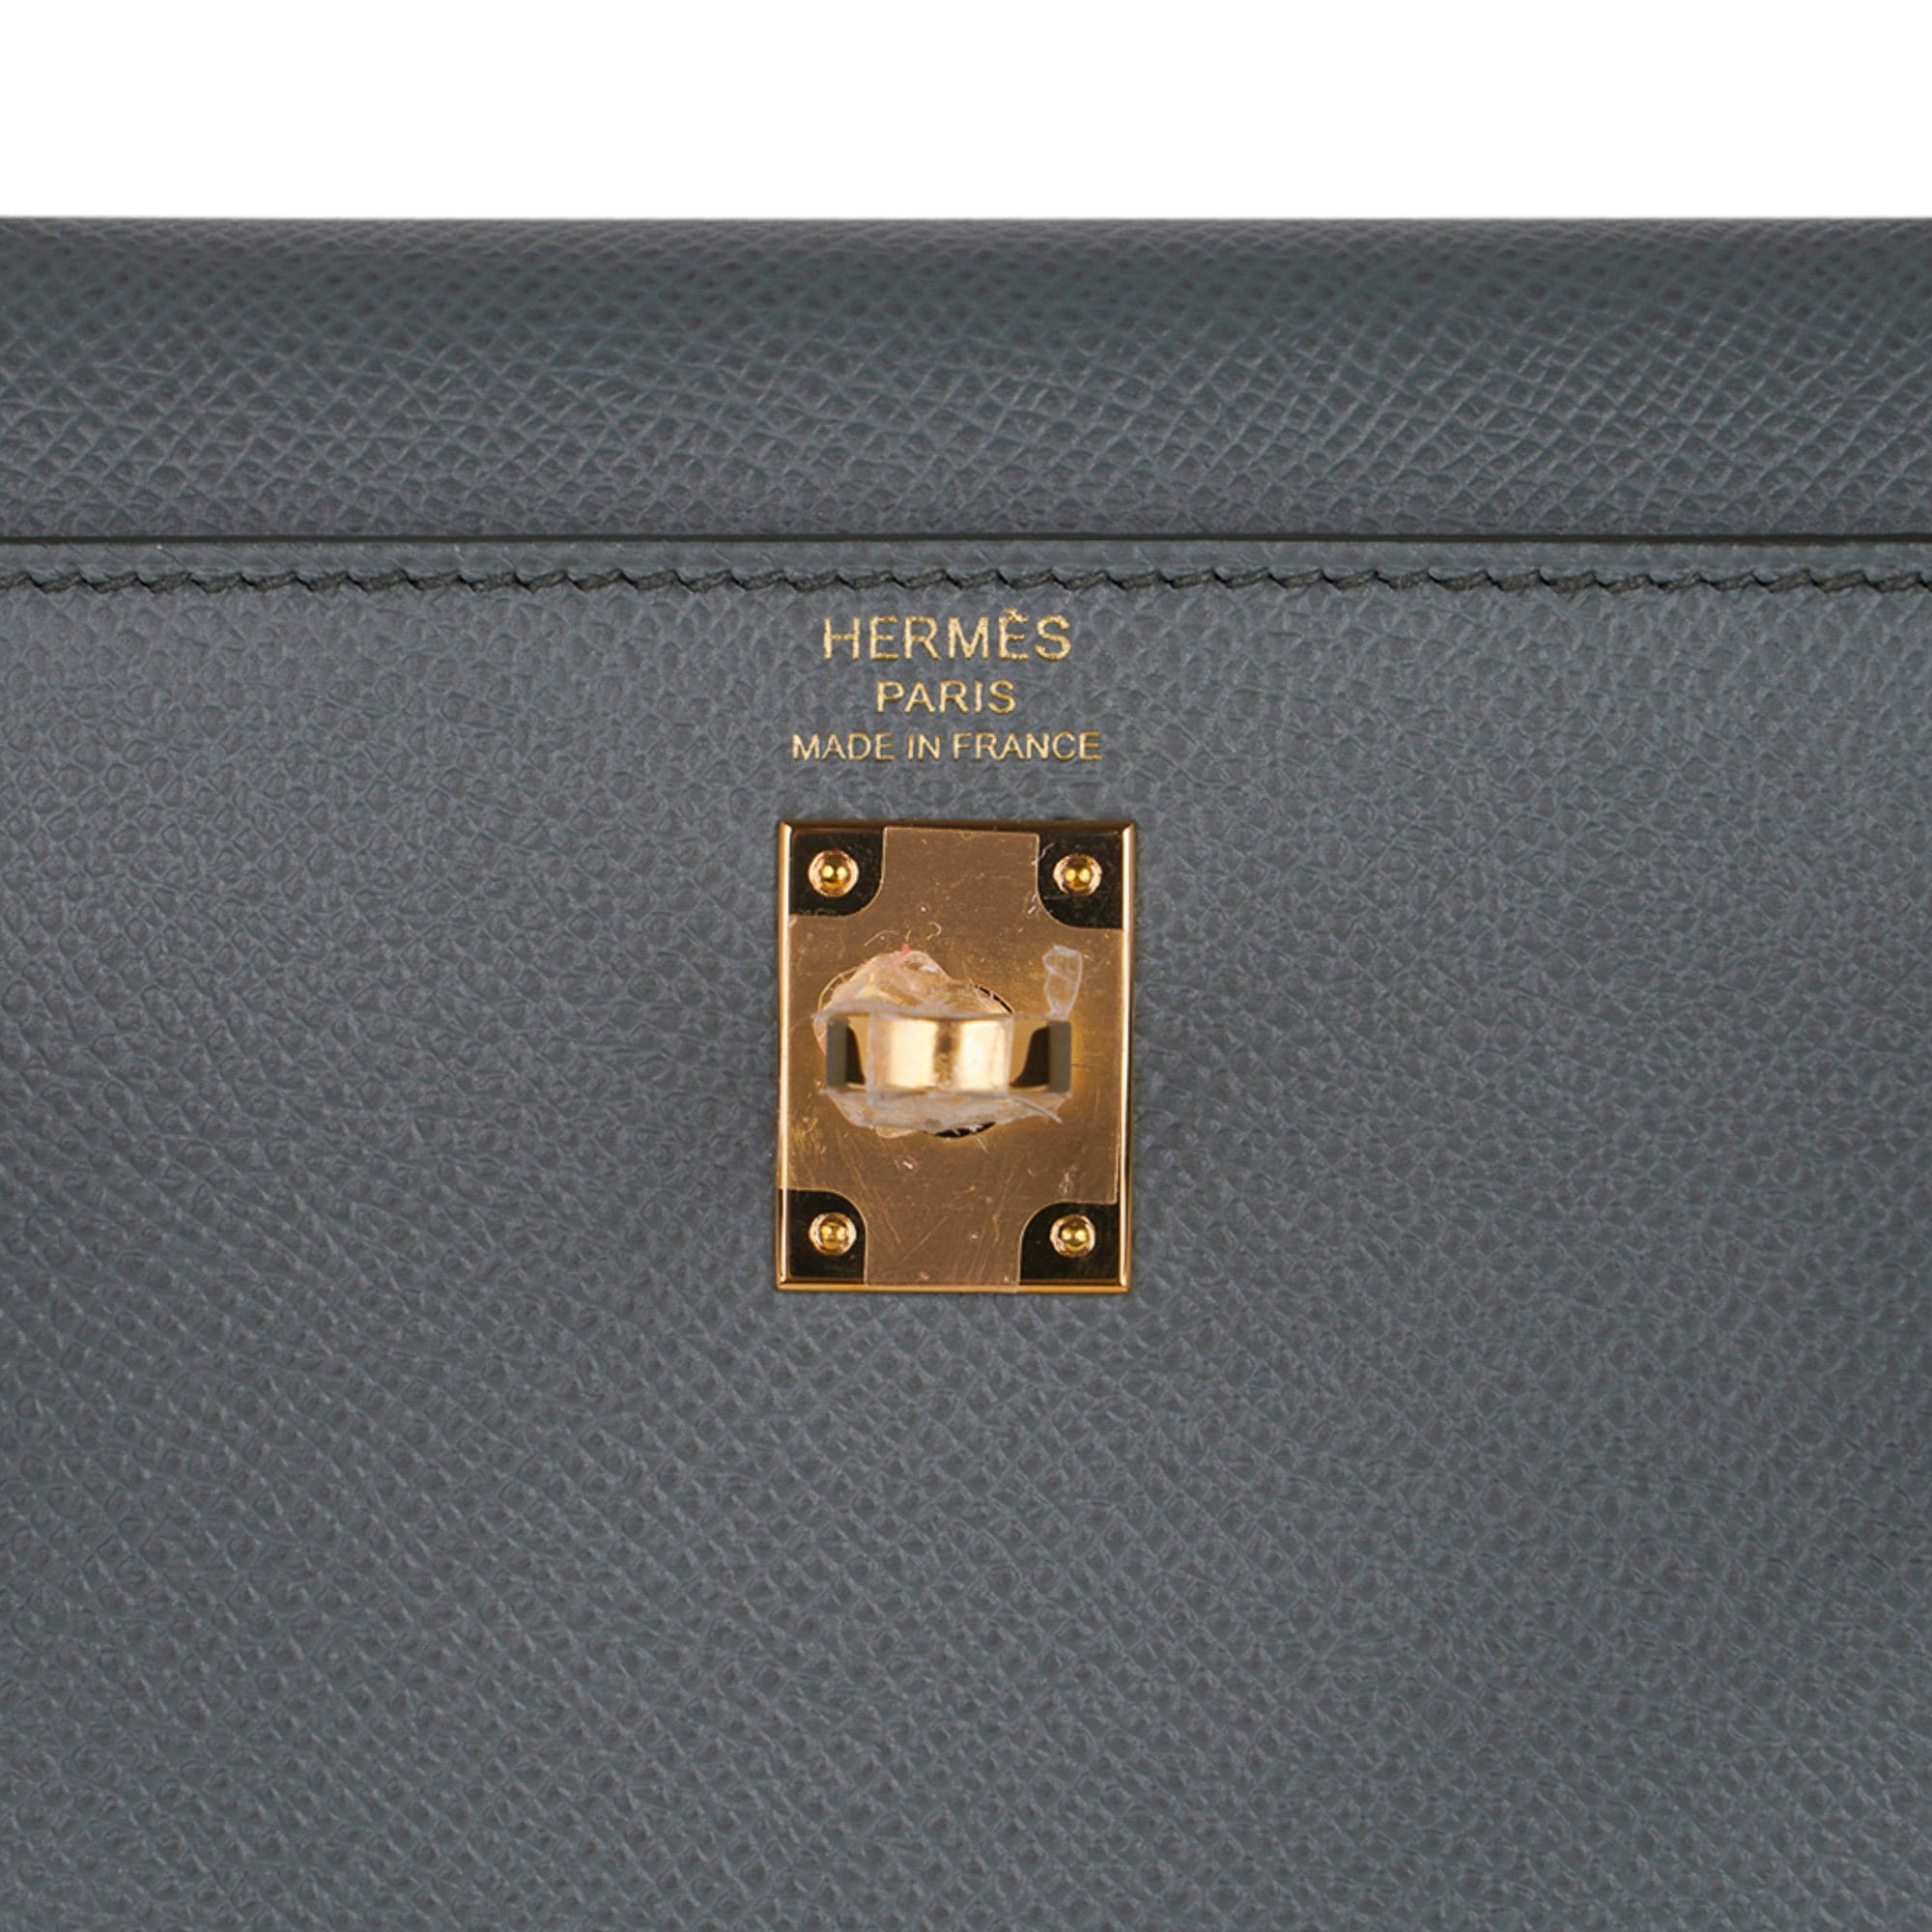 Hermès Kelly 25 Vert Amande Epsom Sellier Gold Hardware – Coco Approved  Studio